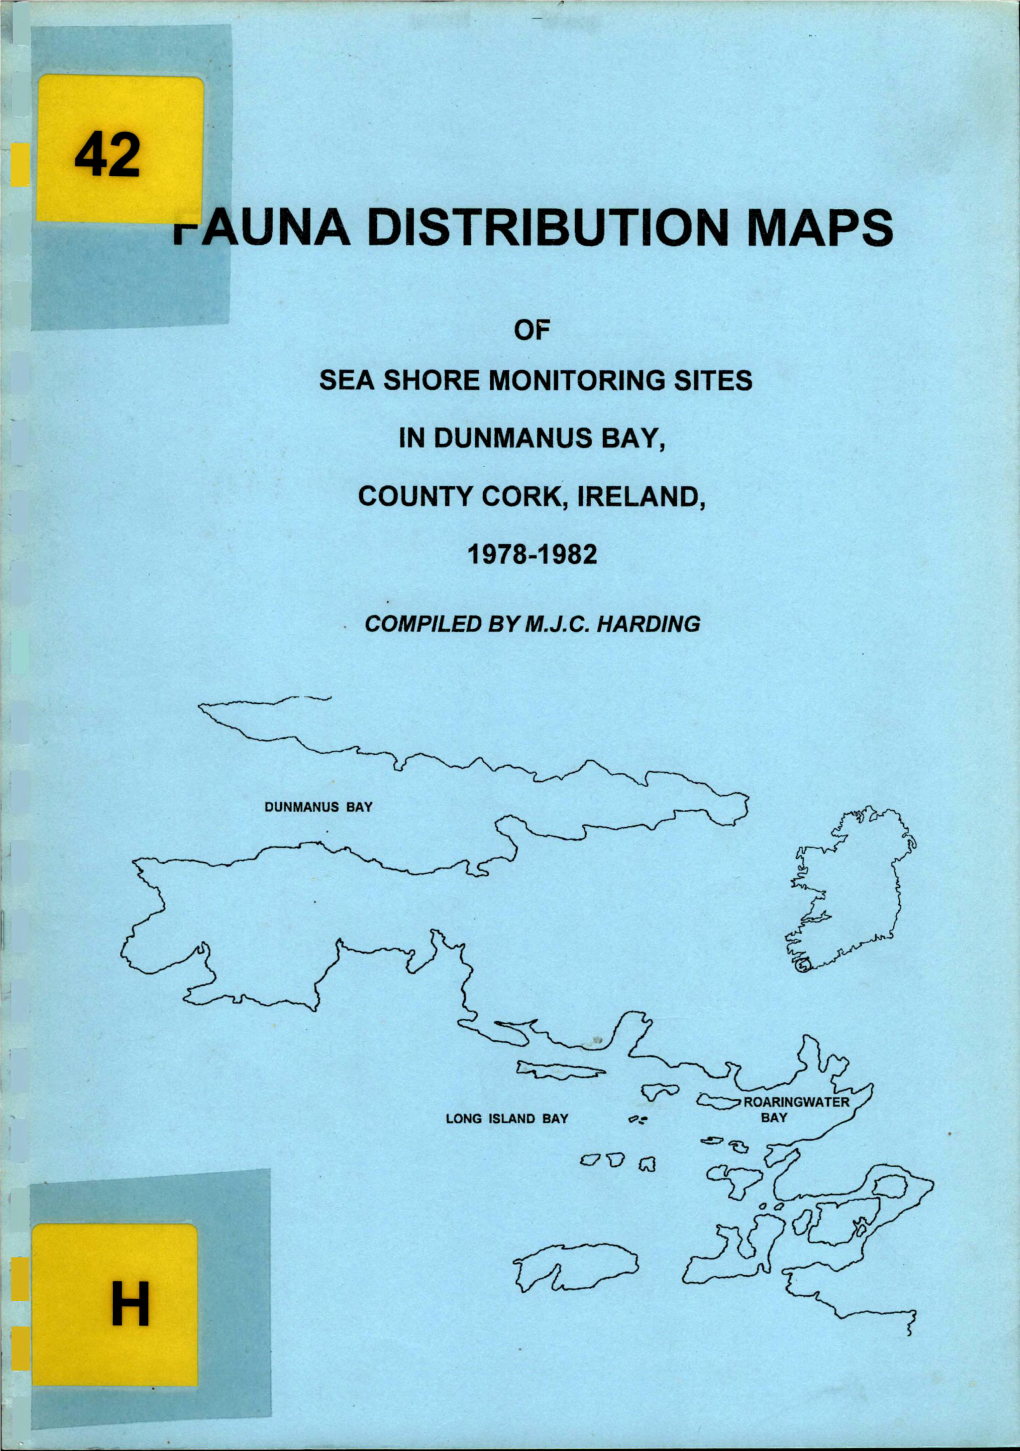 Rauna DISTRIBUTION MAPS